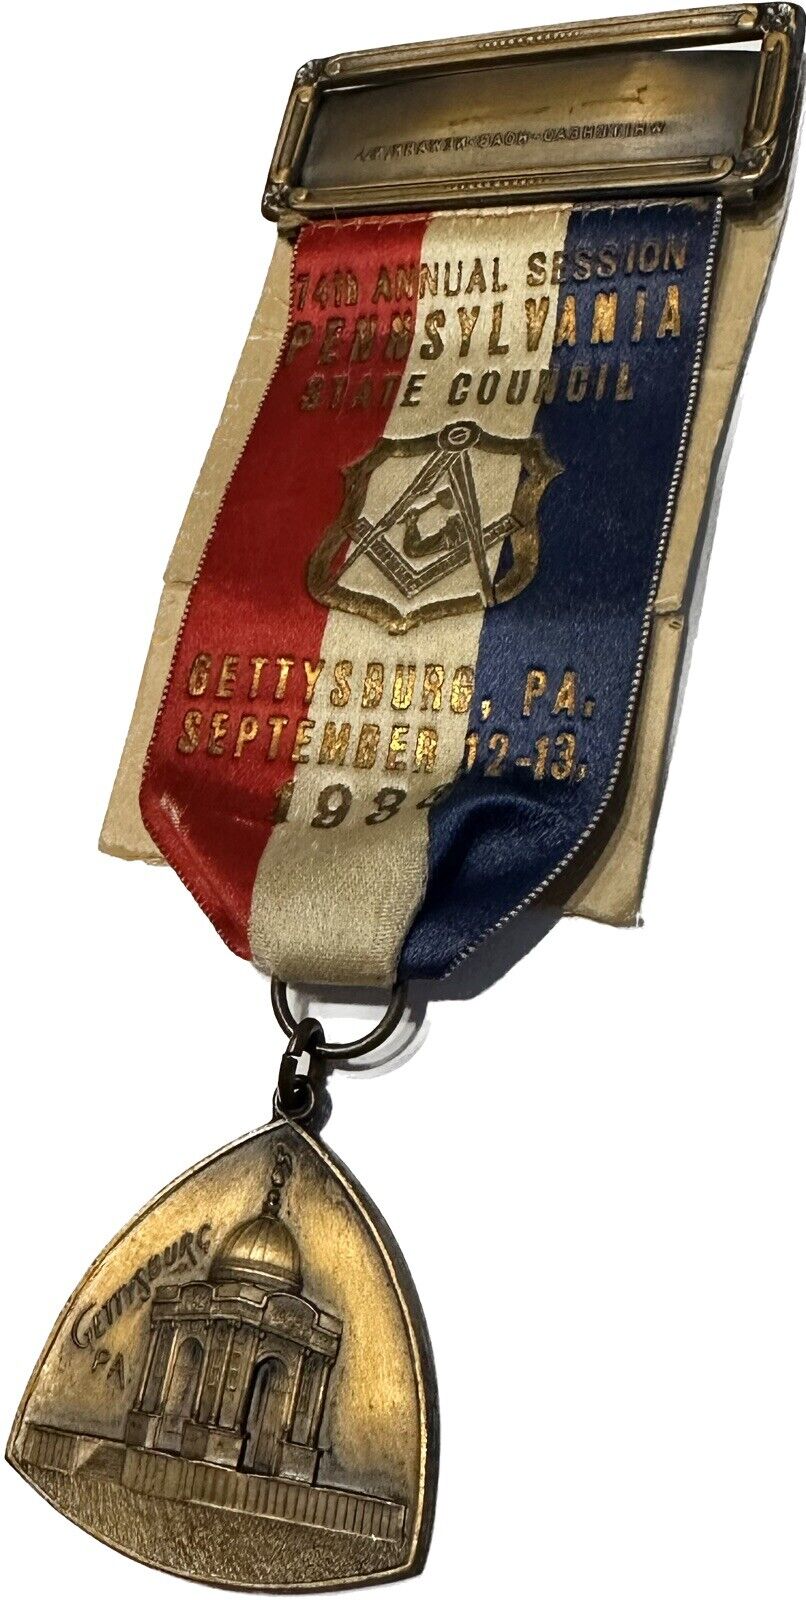 VTG 1933 Gettysburg PA 74th Annual Session State Council Jr. OUAM Ribbon & Medal